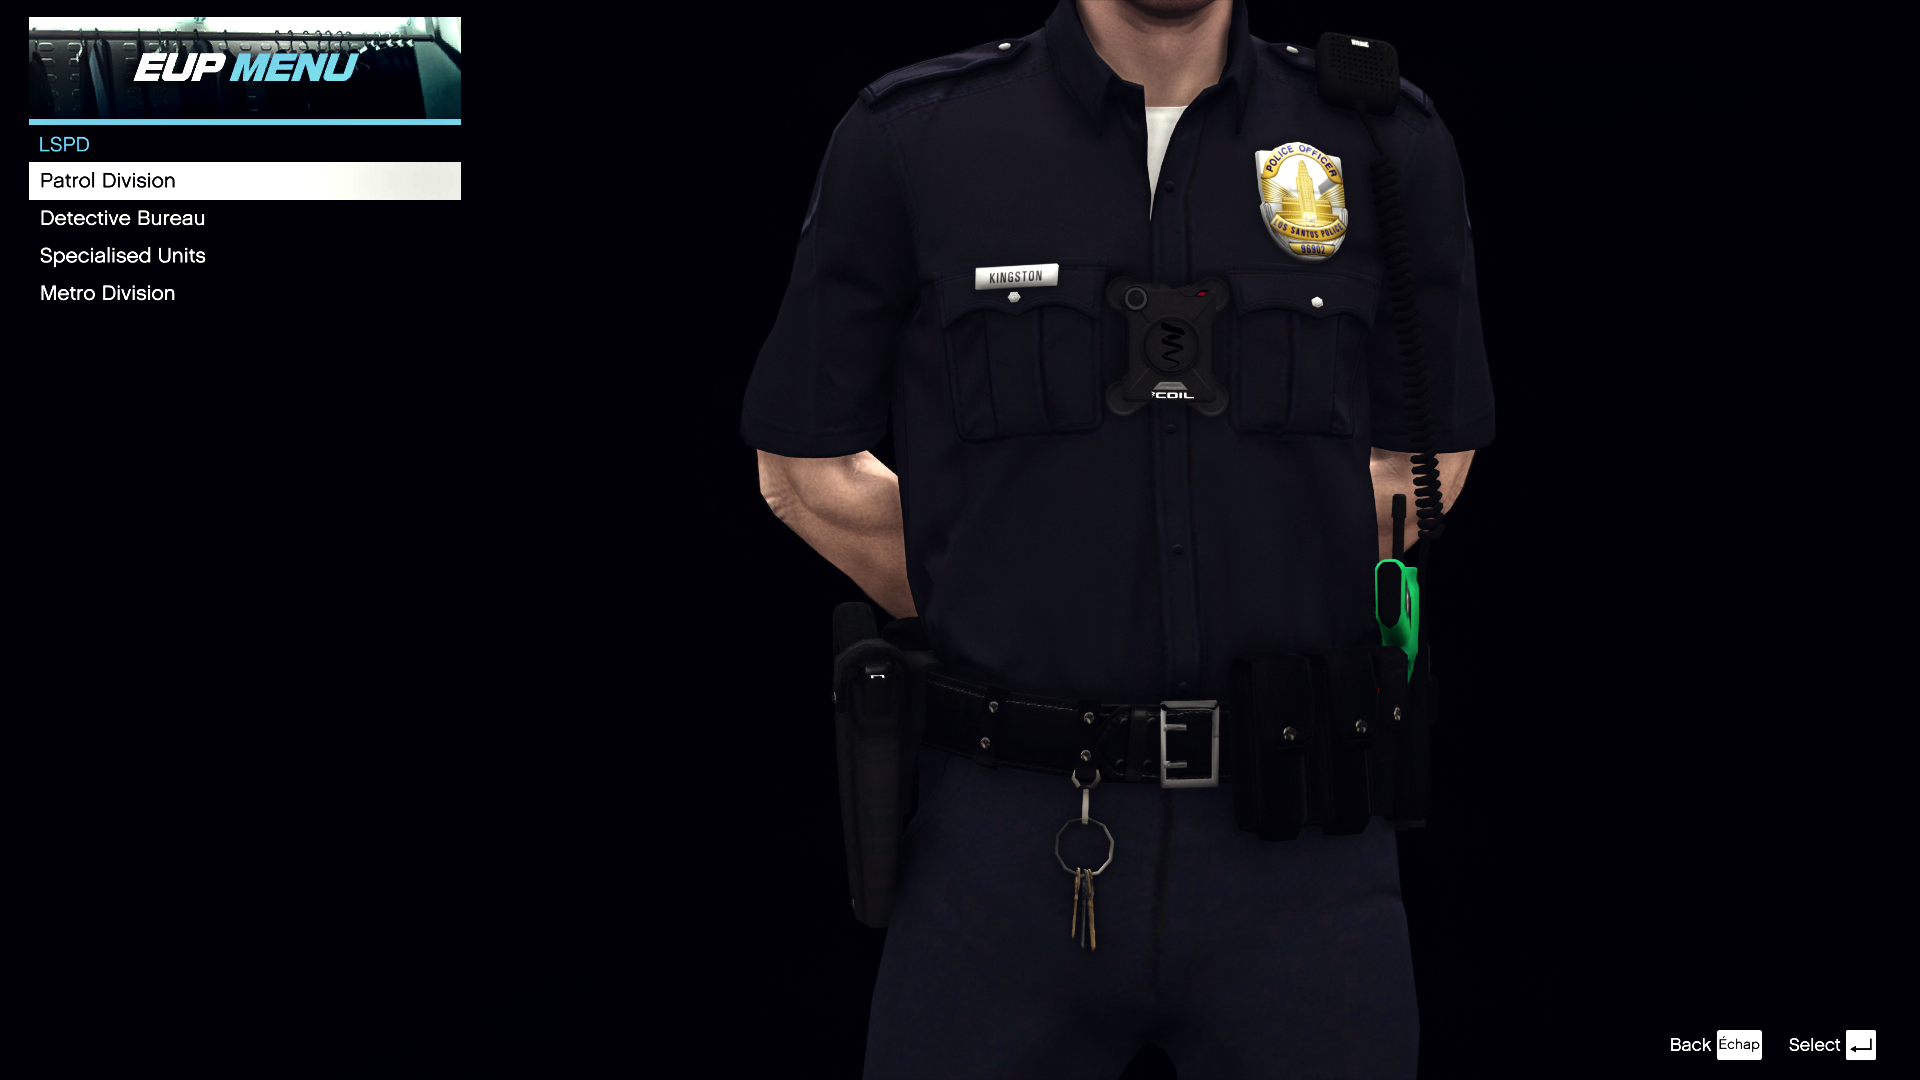 GTA 5 Offline - How to become POLICE in GTA 5, Original Version, Police  Mod, LSPDFR